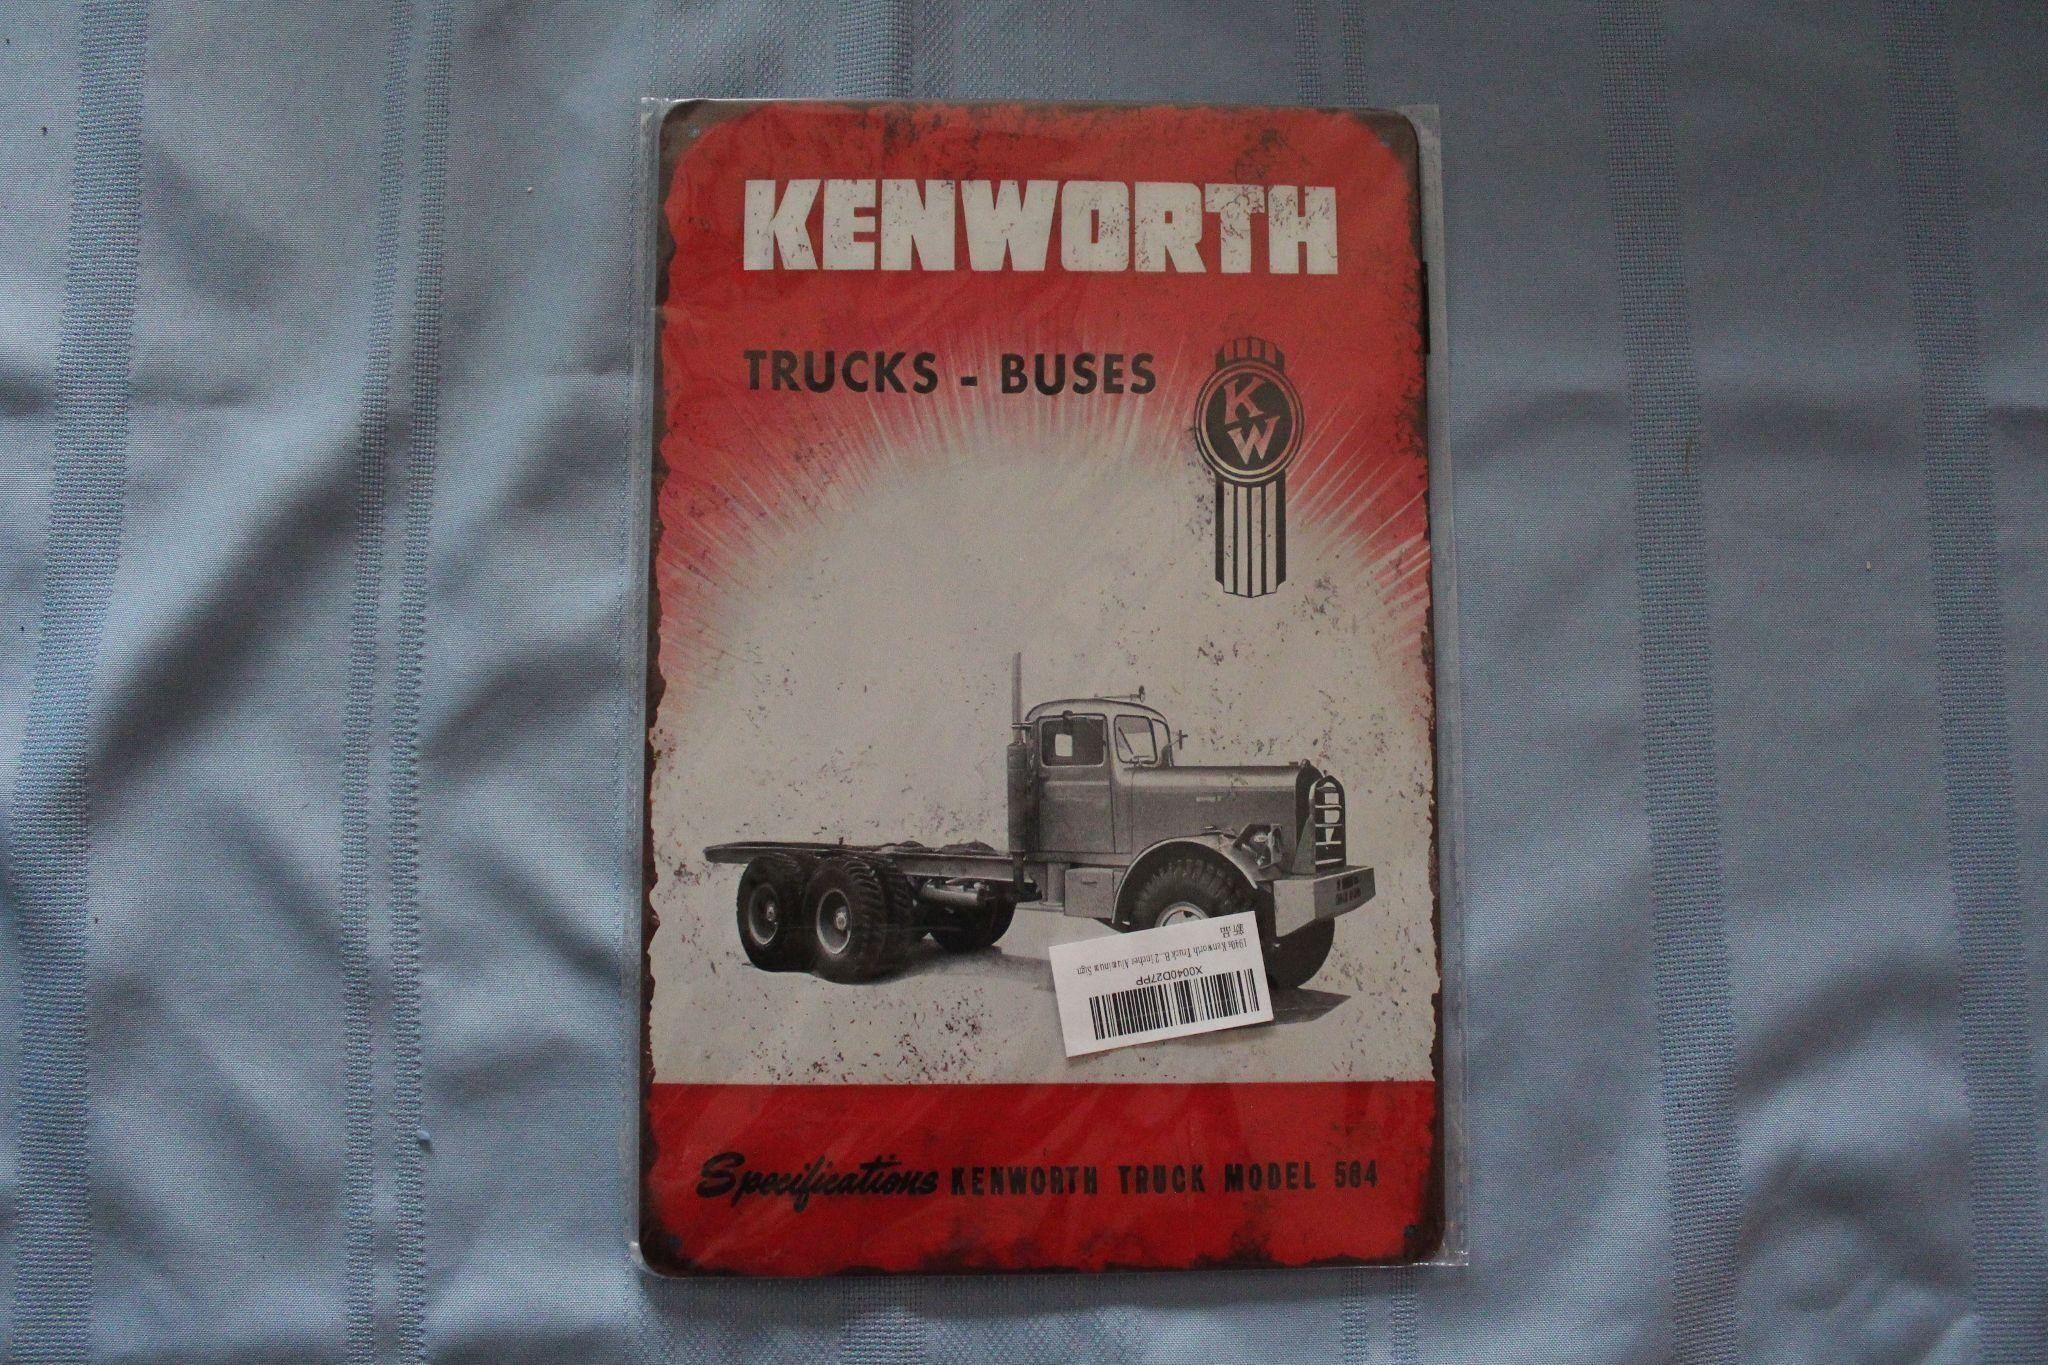 Retro 1940s "Kenworth Trucks Buses" Sign